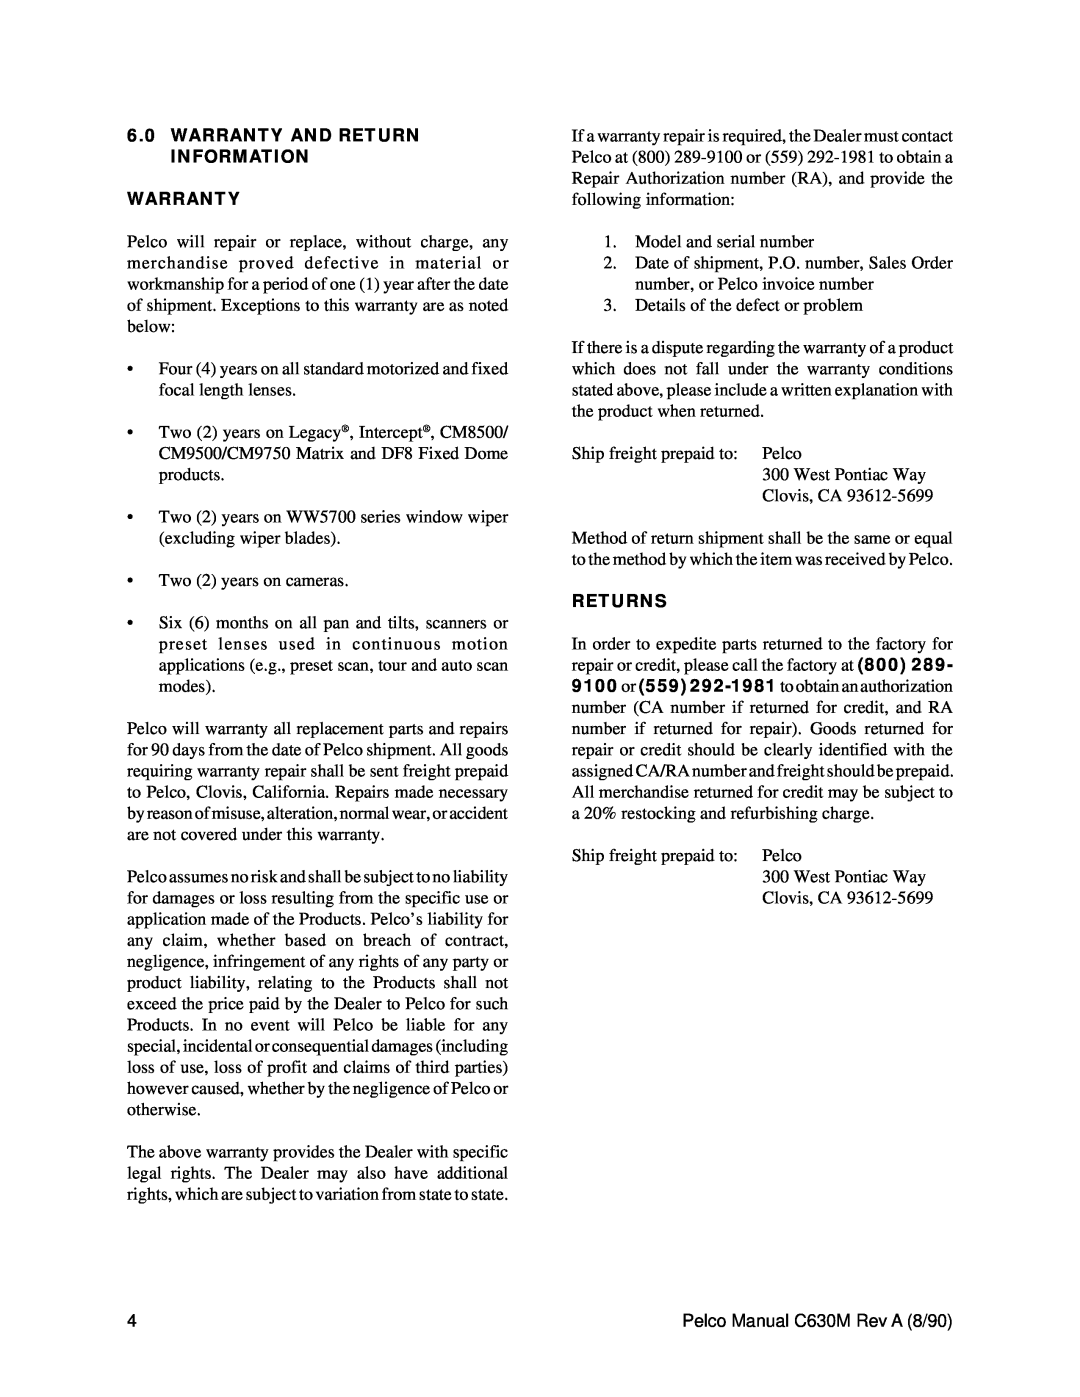 Pelco EA2010 operation manual 6.0WARRANTY AND RETURN INFORMATION WARRANTY, Returns 